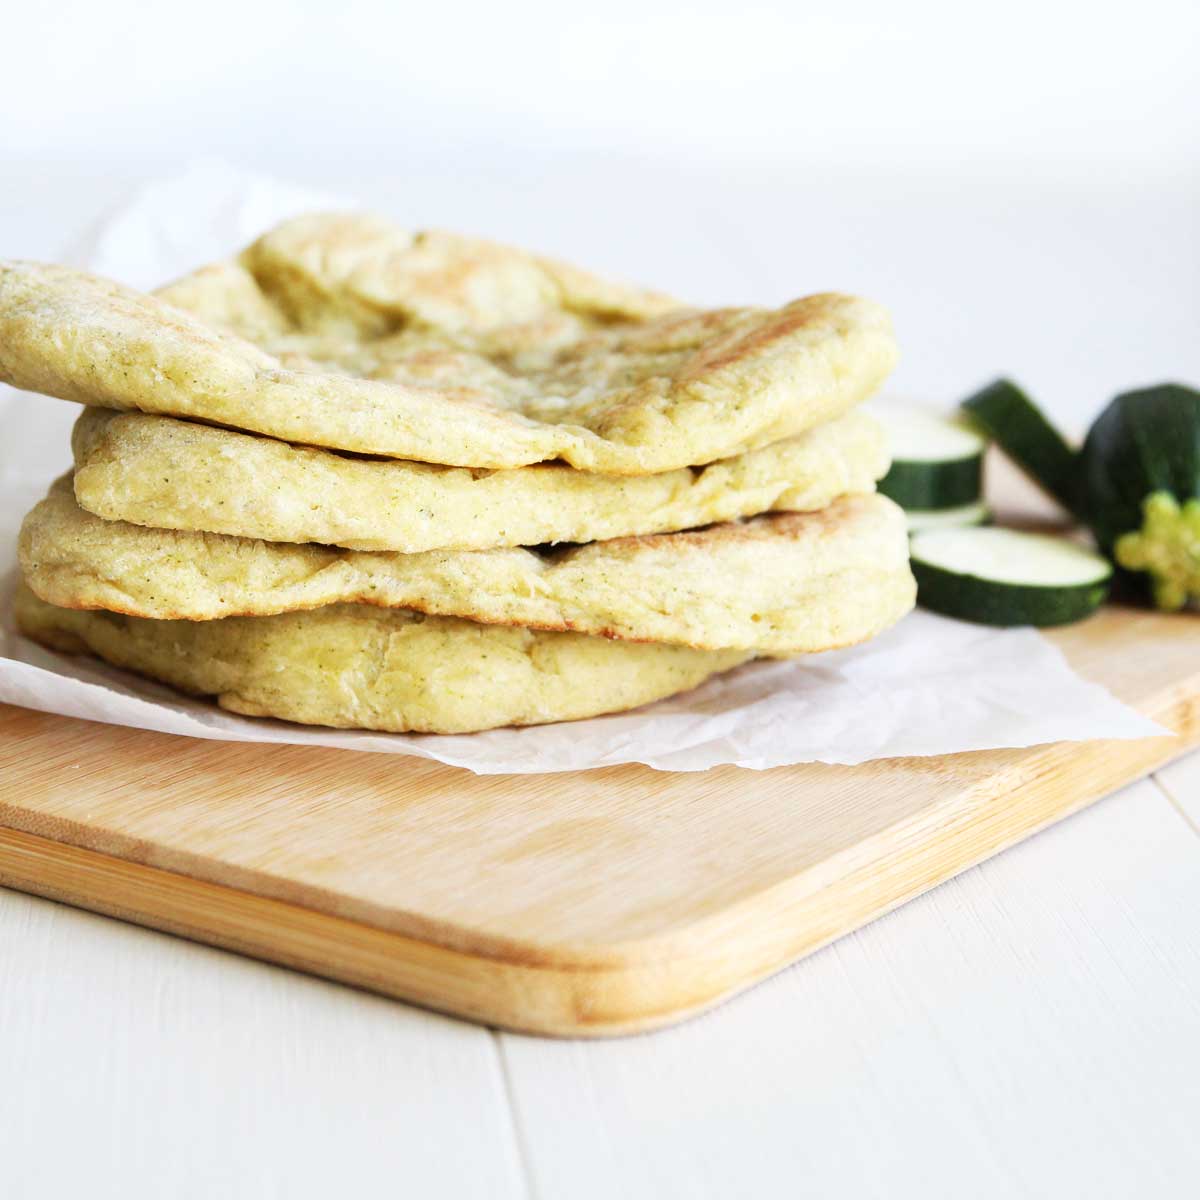 Healthy & Simple Zucchini Flatbread Made in the Food Processor - Pistachio Nice Cream